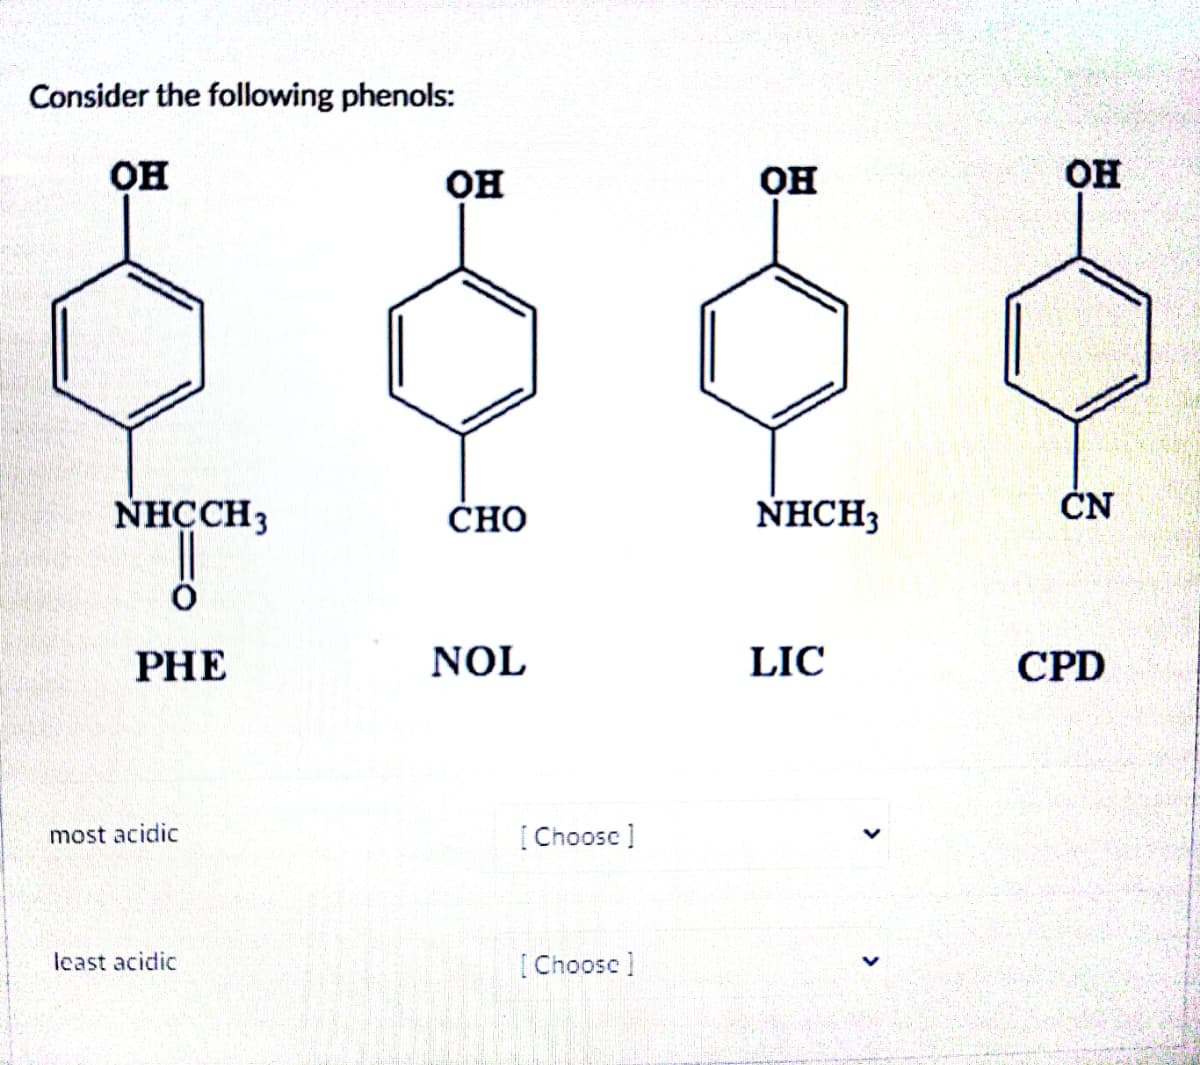 Consider the following phenols:
OH
NHCCH3
PHE
most acidic
least acidic
OH
CHO
NOL
[Choose ]
[Choose]
OH
NHCH3
LIC
OH
CN
CPD